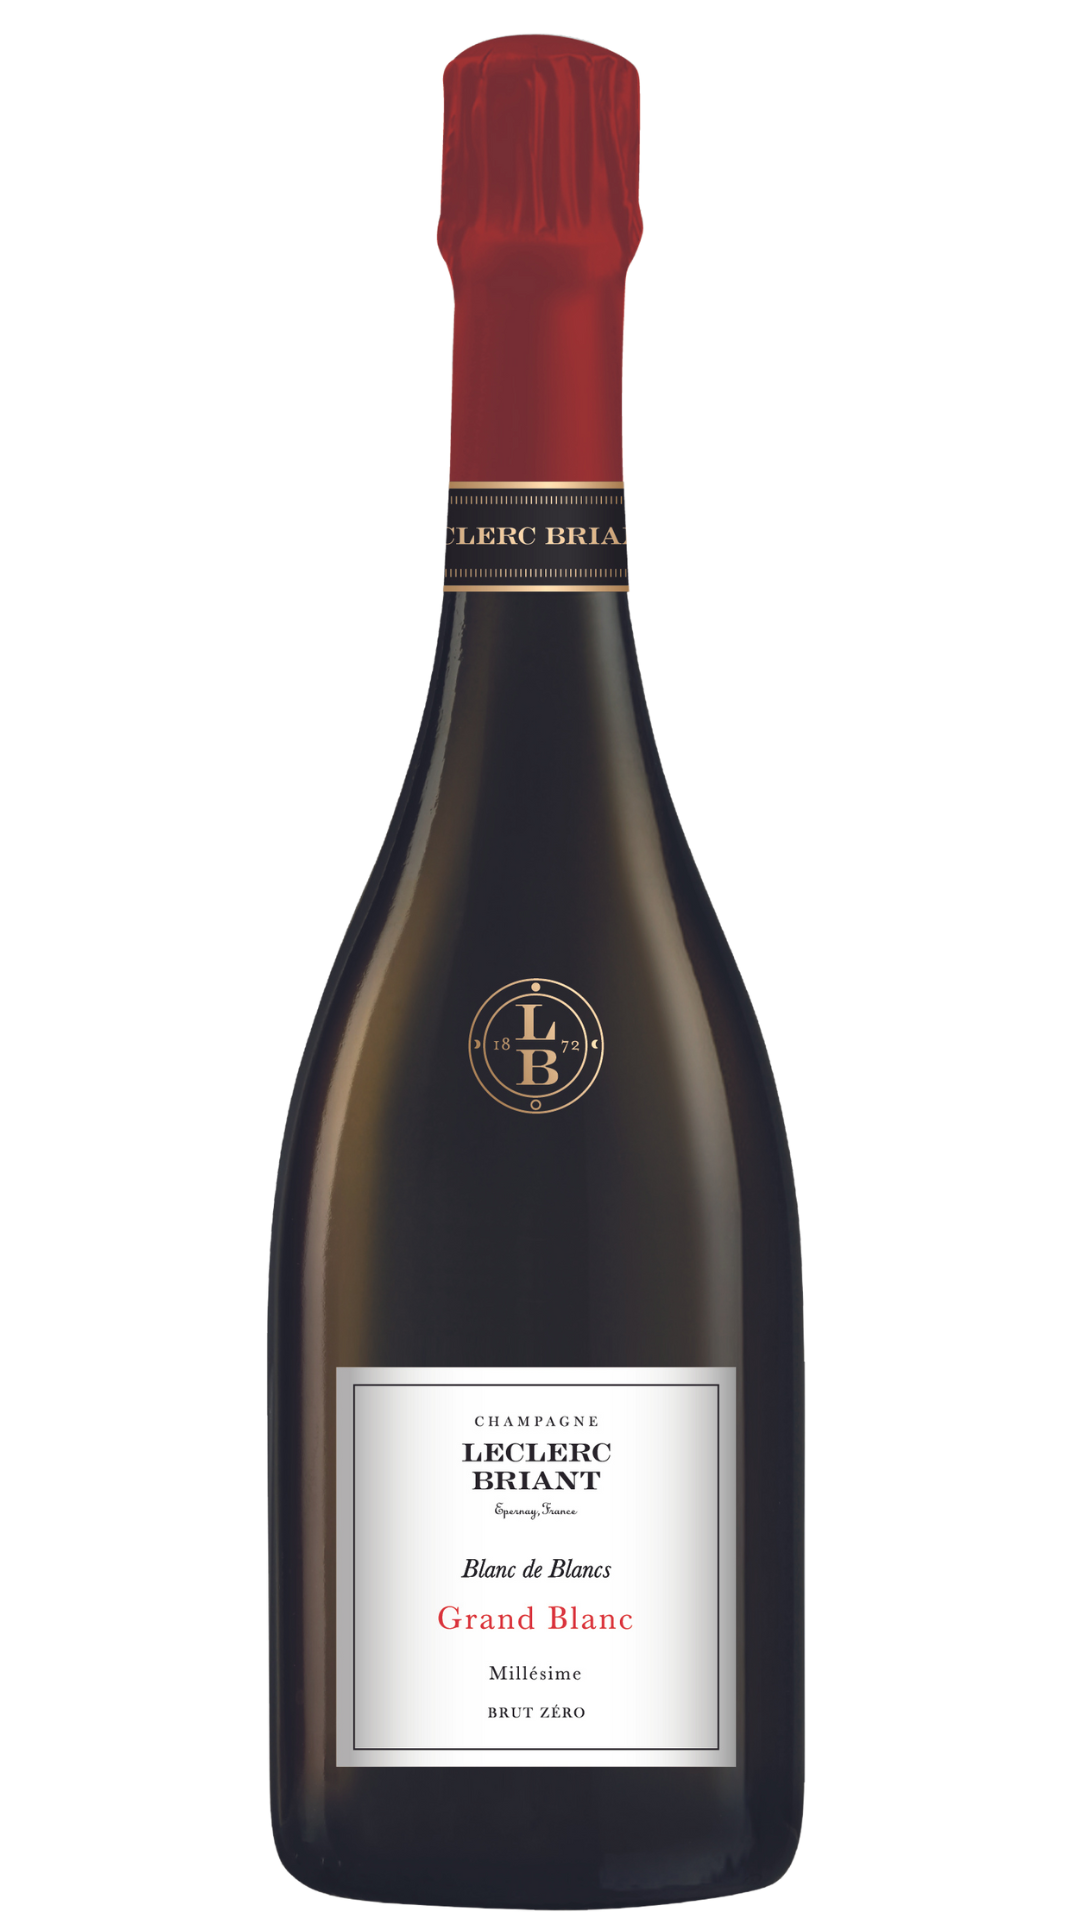 Champagne Leclerc Briant Grand Blanc 2013 750ml